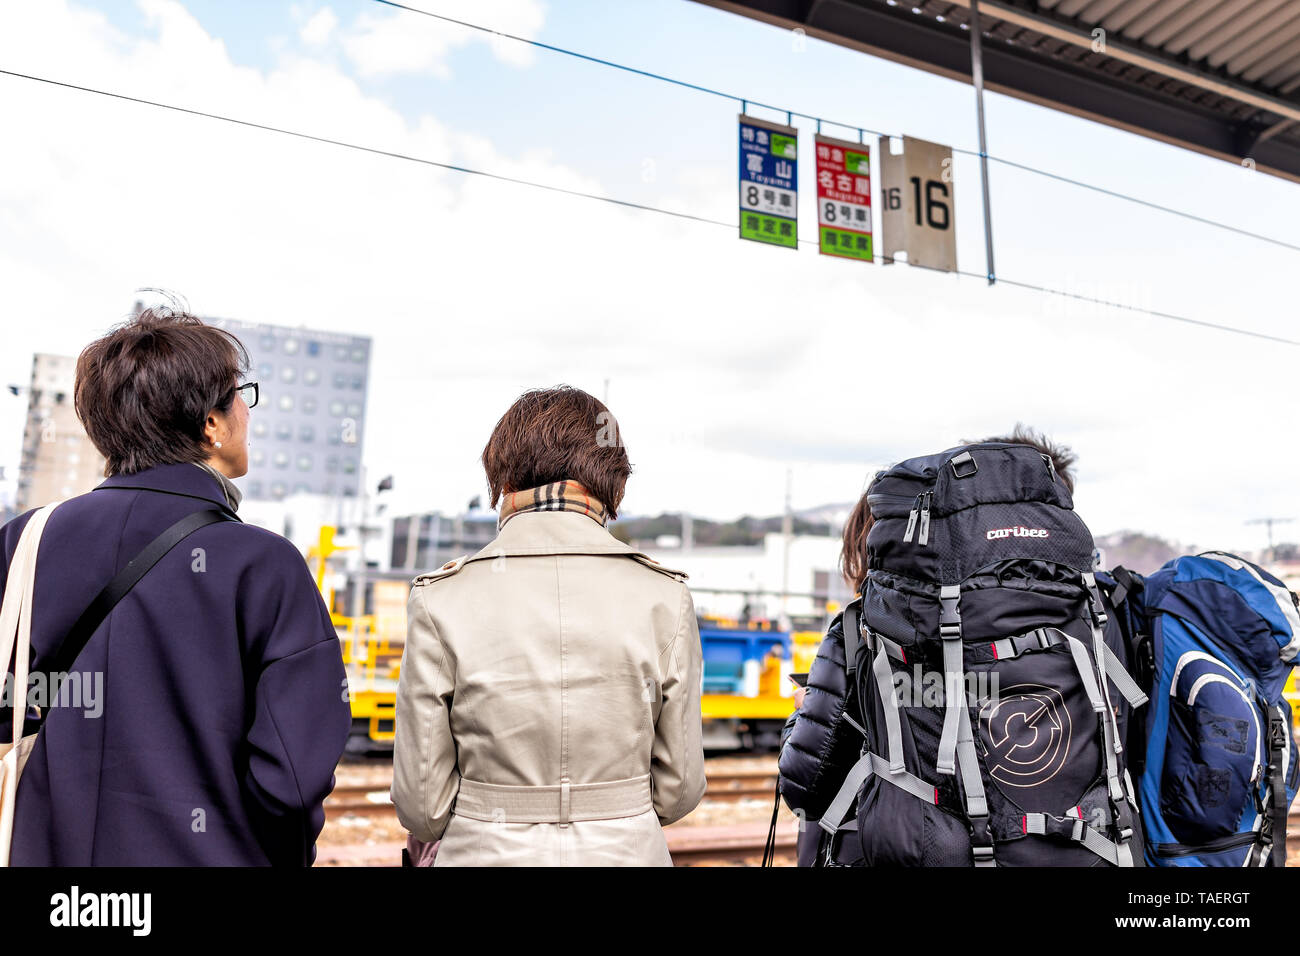 Takayama, Japan - April 8, 2019: JR train station platform in Gifu prefecture in Japan with people waiting for Hida shinkansen by car number Stock Photo